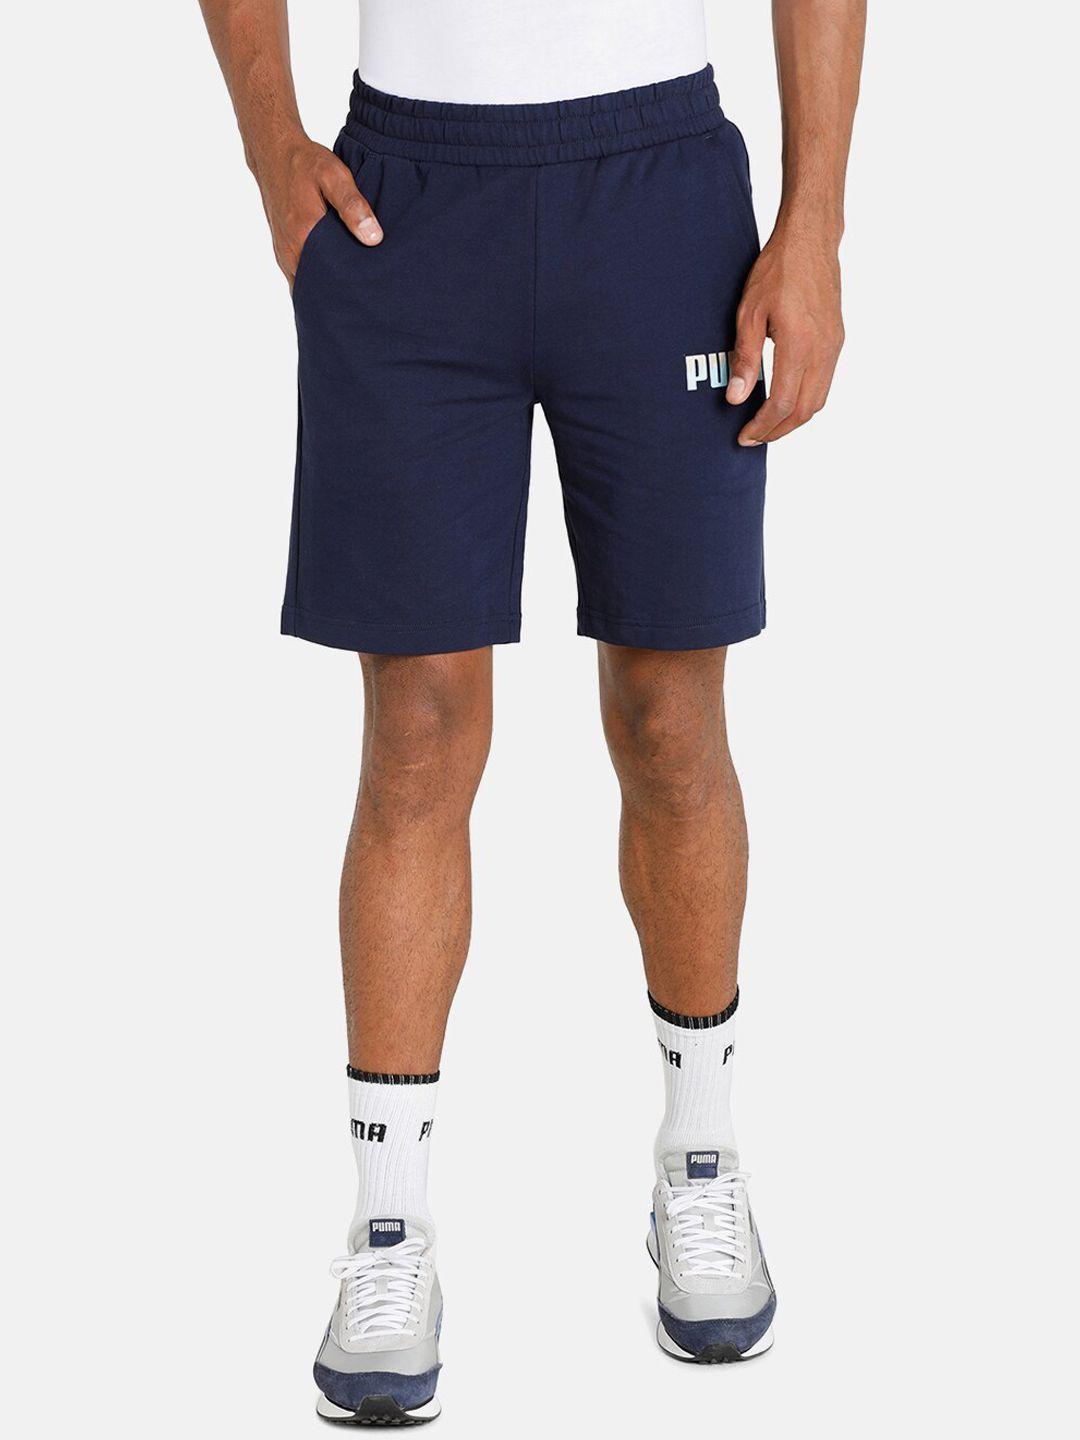 puma-men-blue-slim-fit-sports-shorts